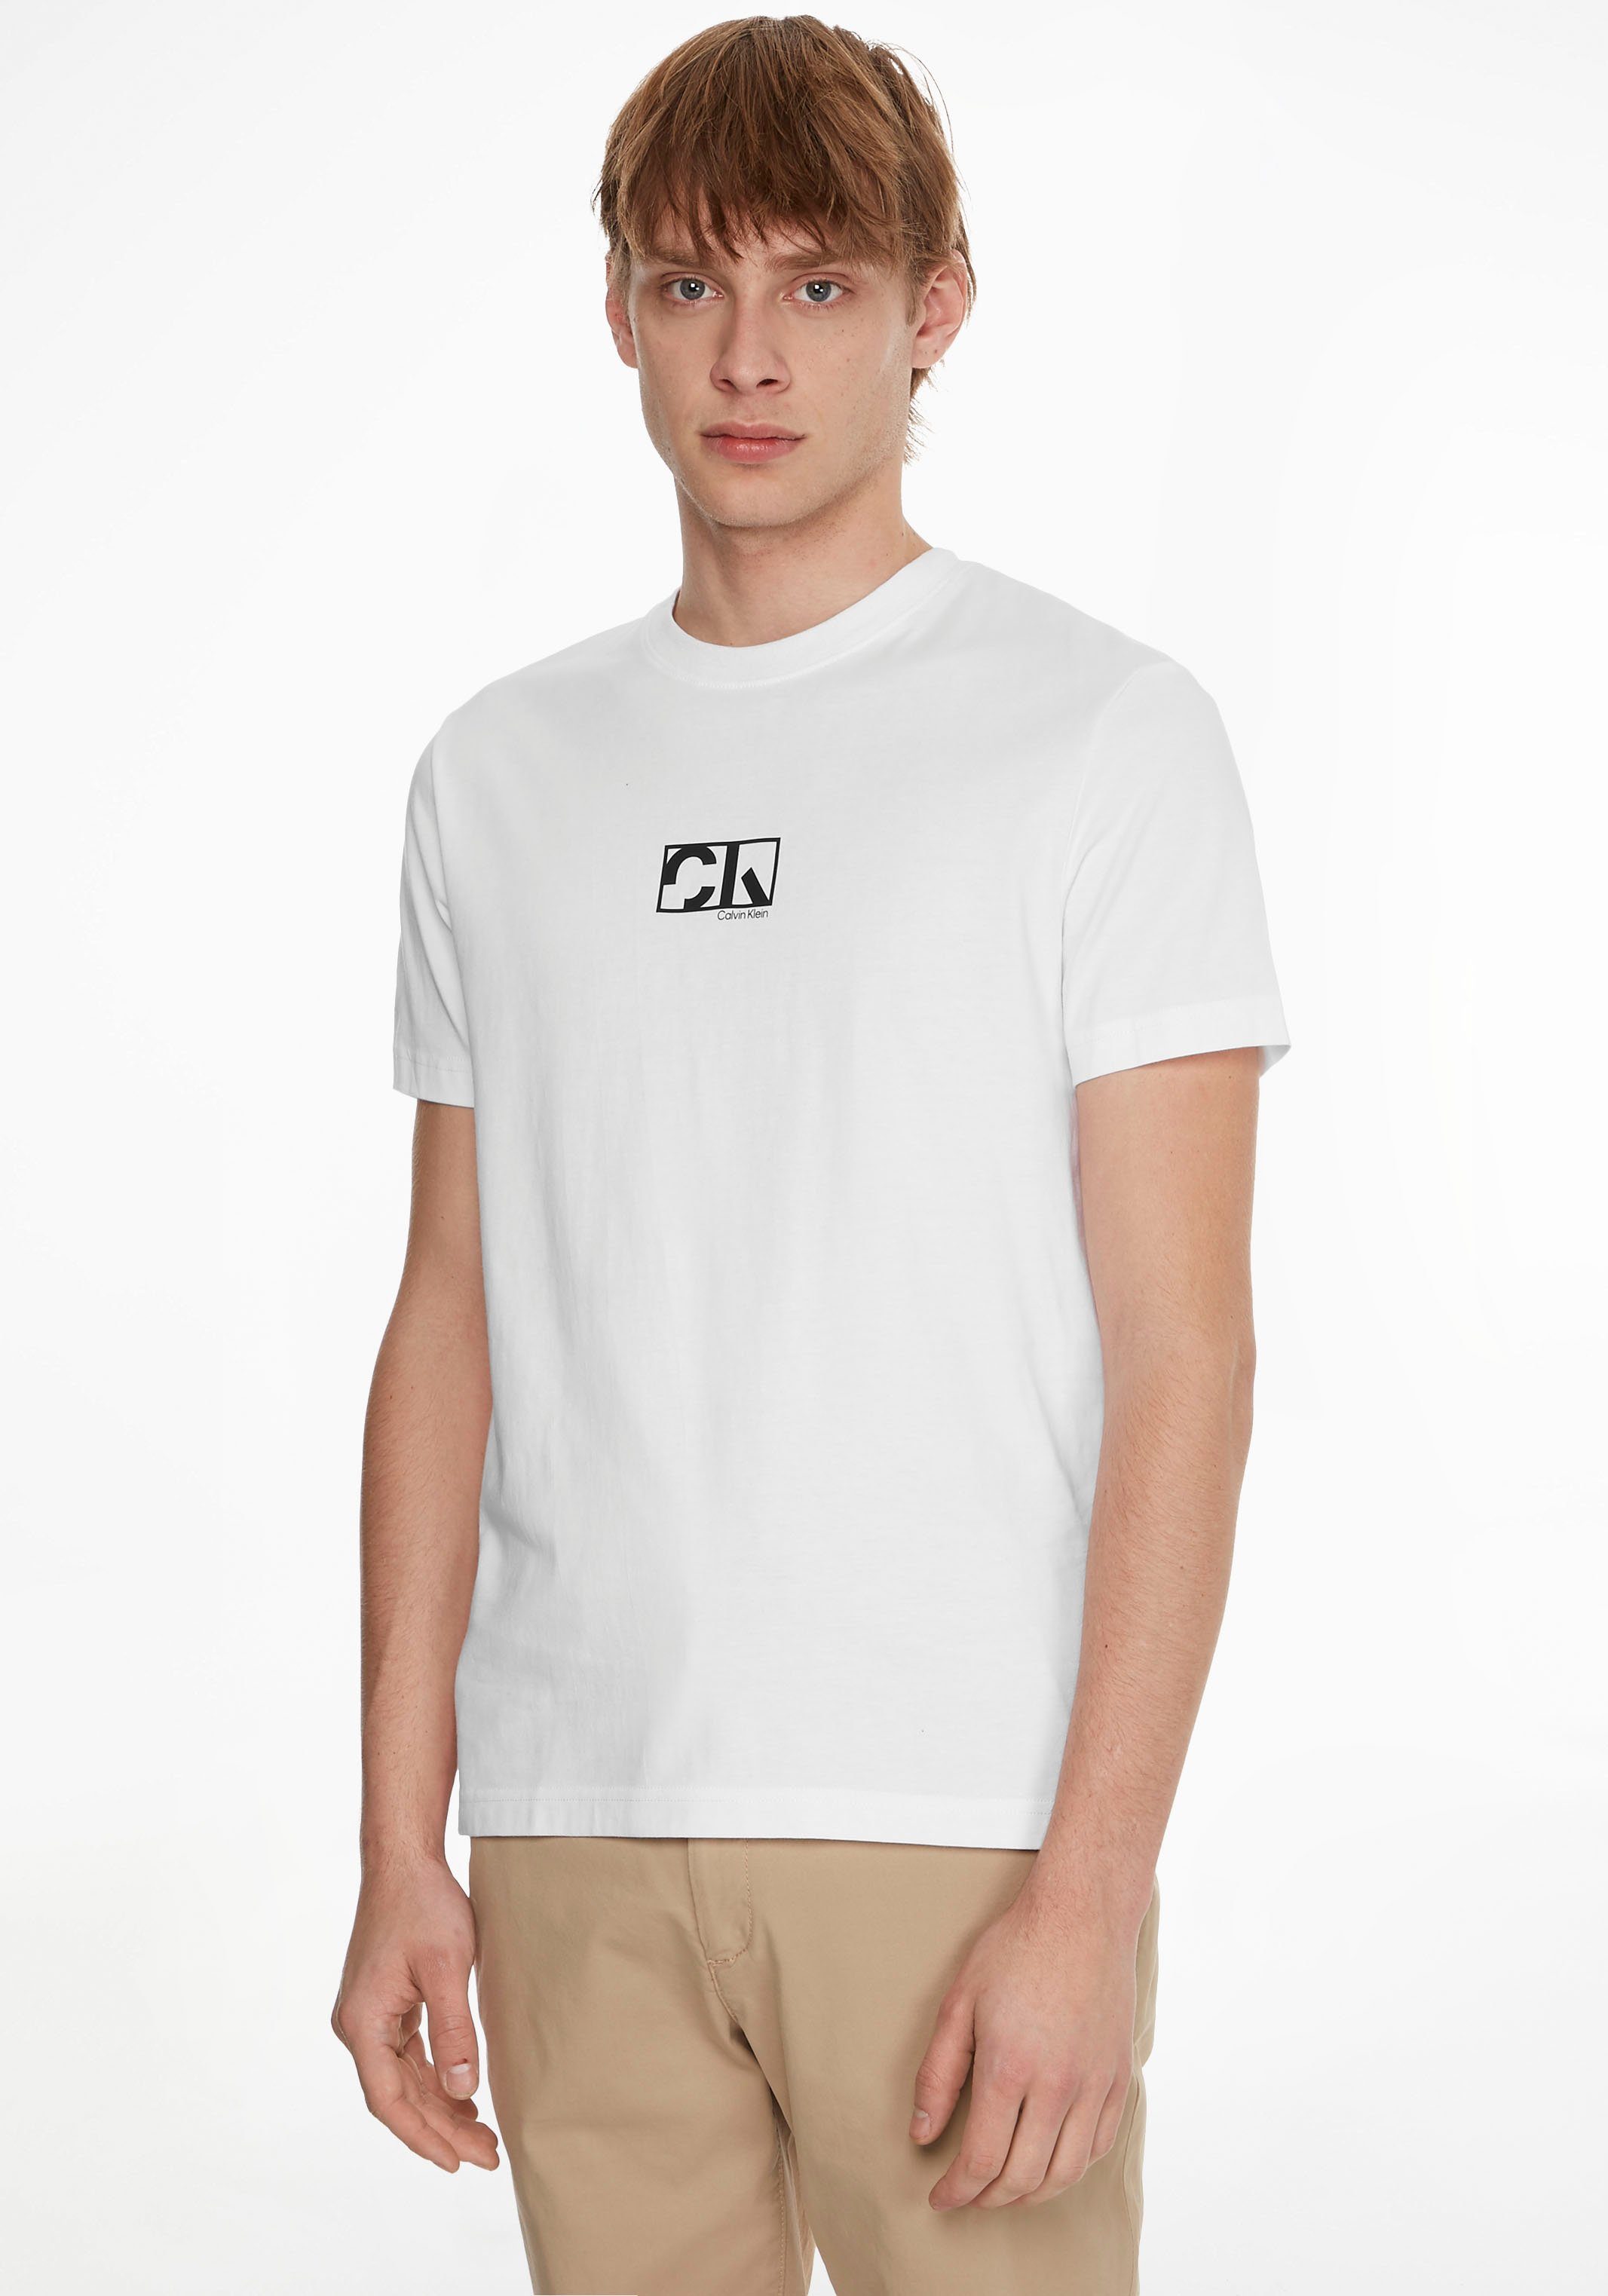 GRAPHIC T-Shirt T-SHIRT LOGO white BOX Klein bright Calvin